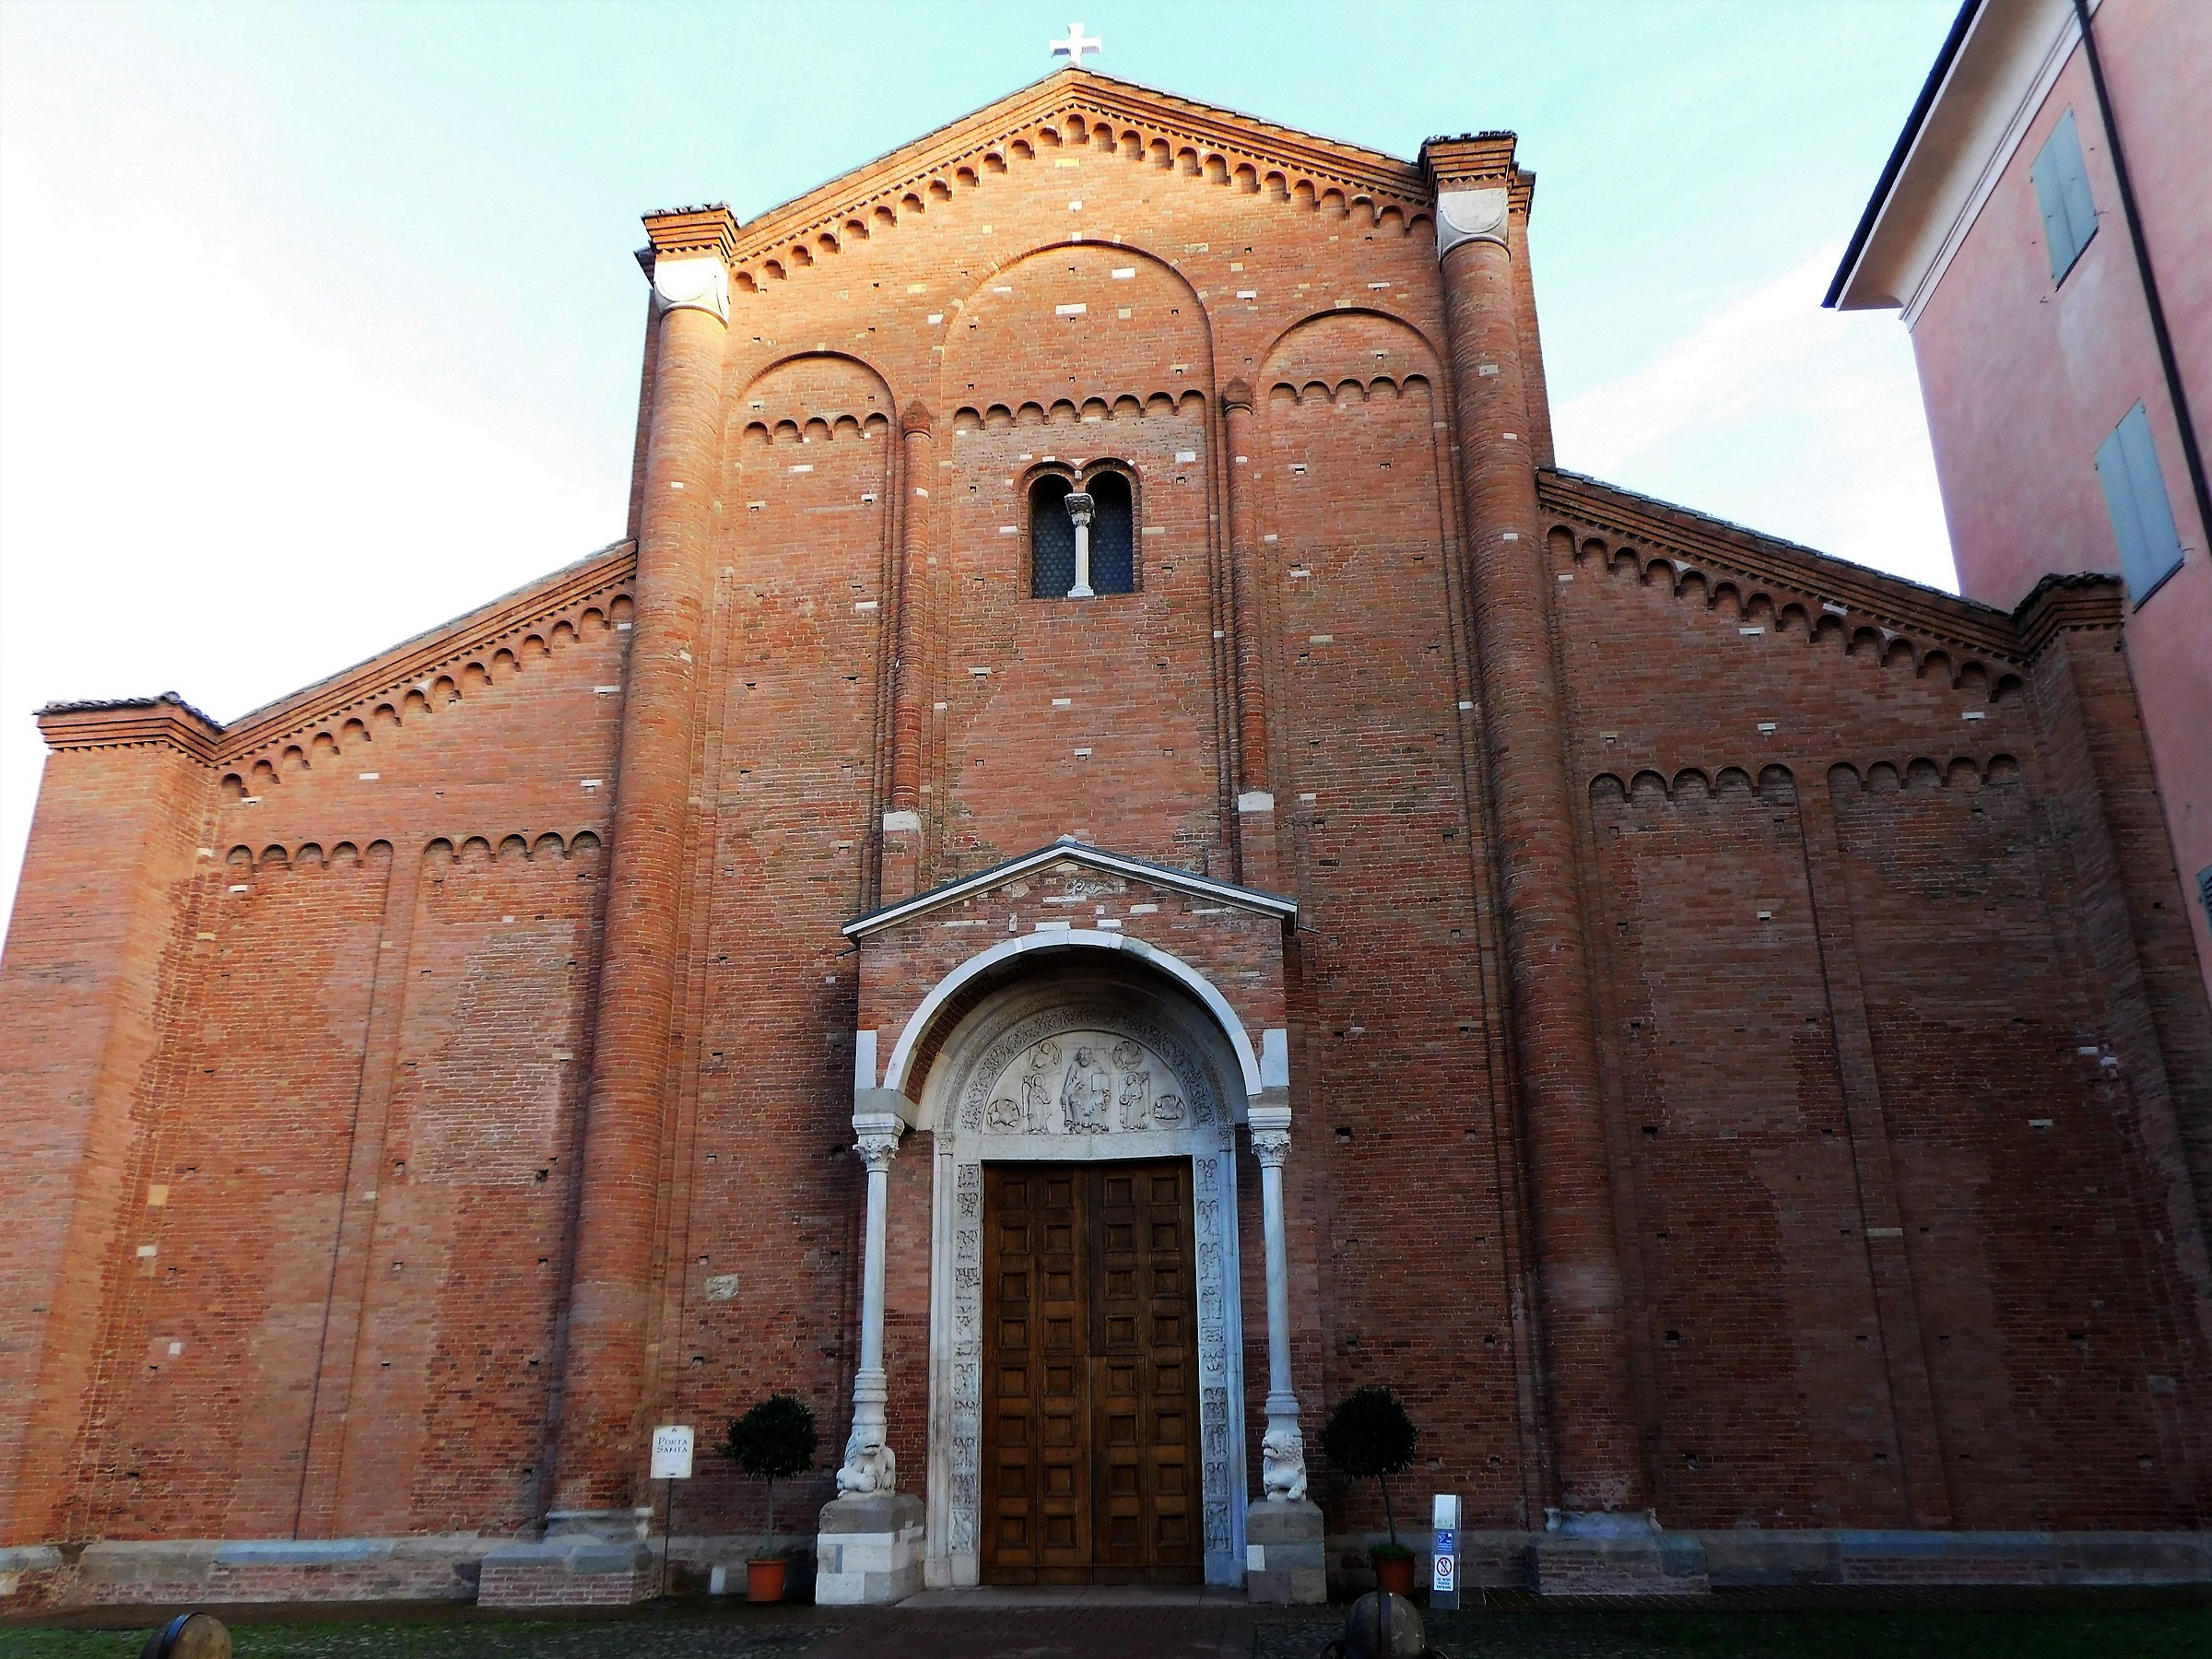 The Abbey of Nonantola...